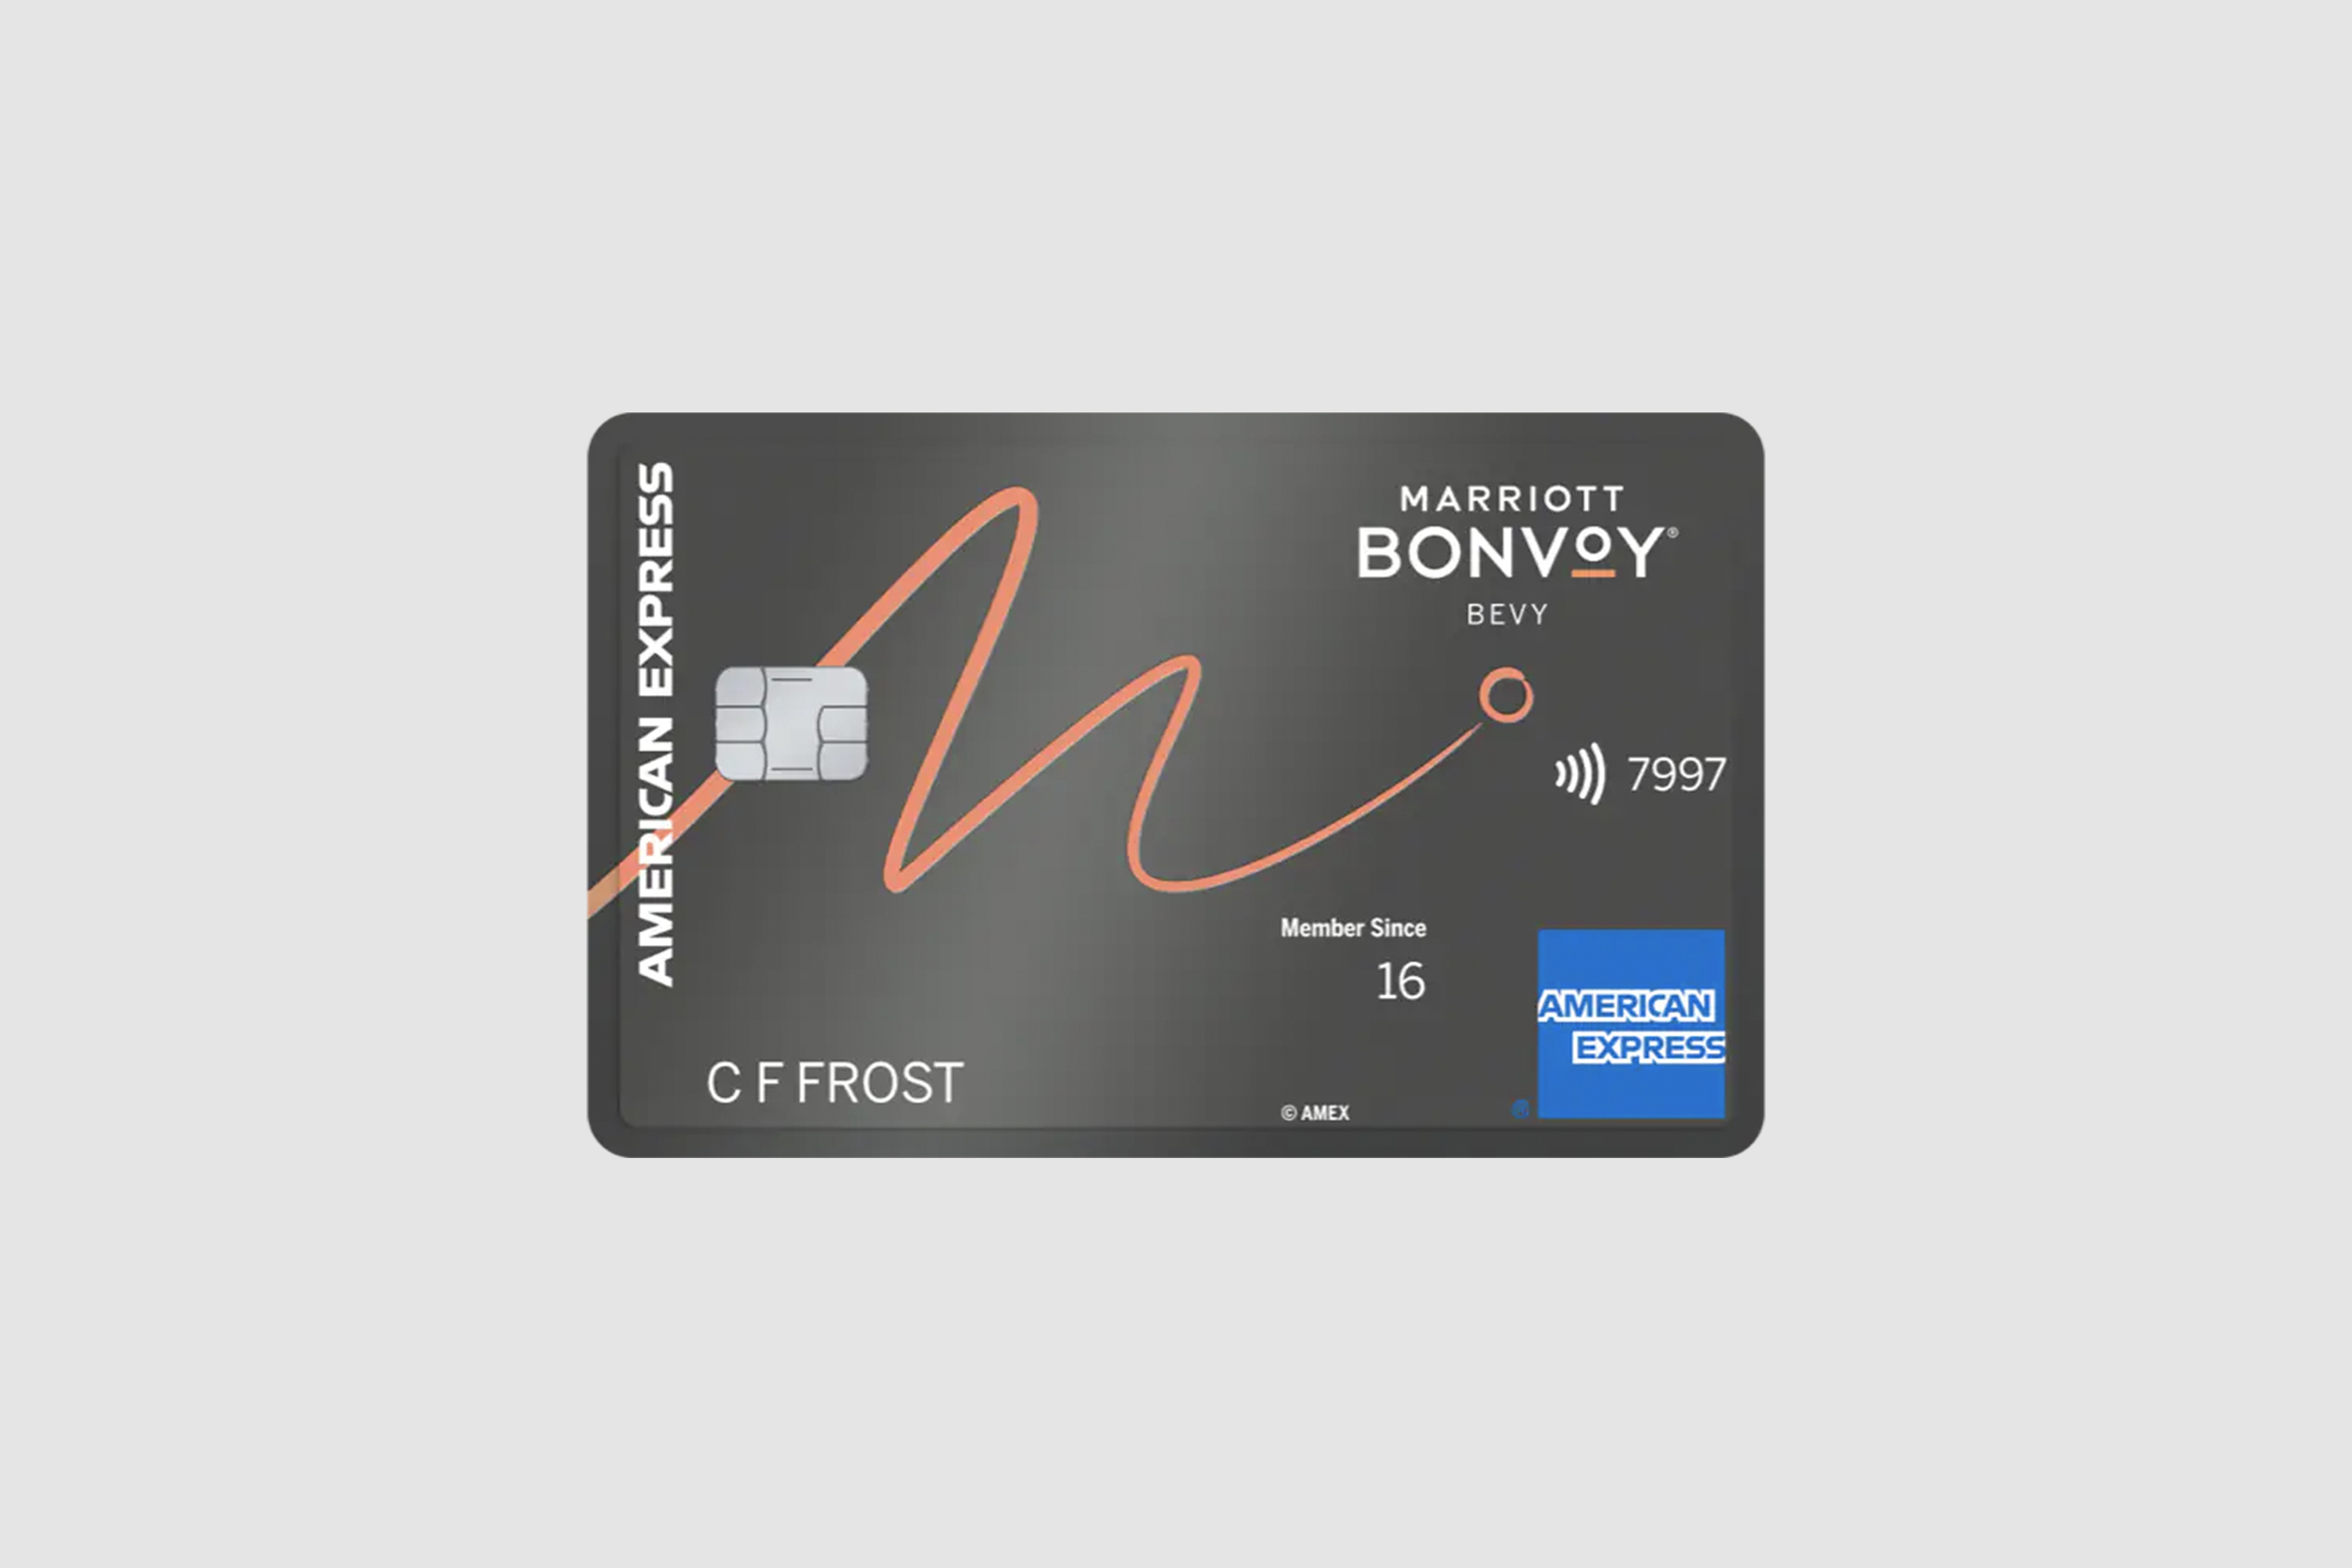 American Express Marriott Bonvoy Bevy Credit Card